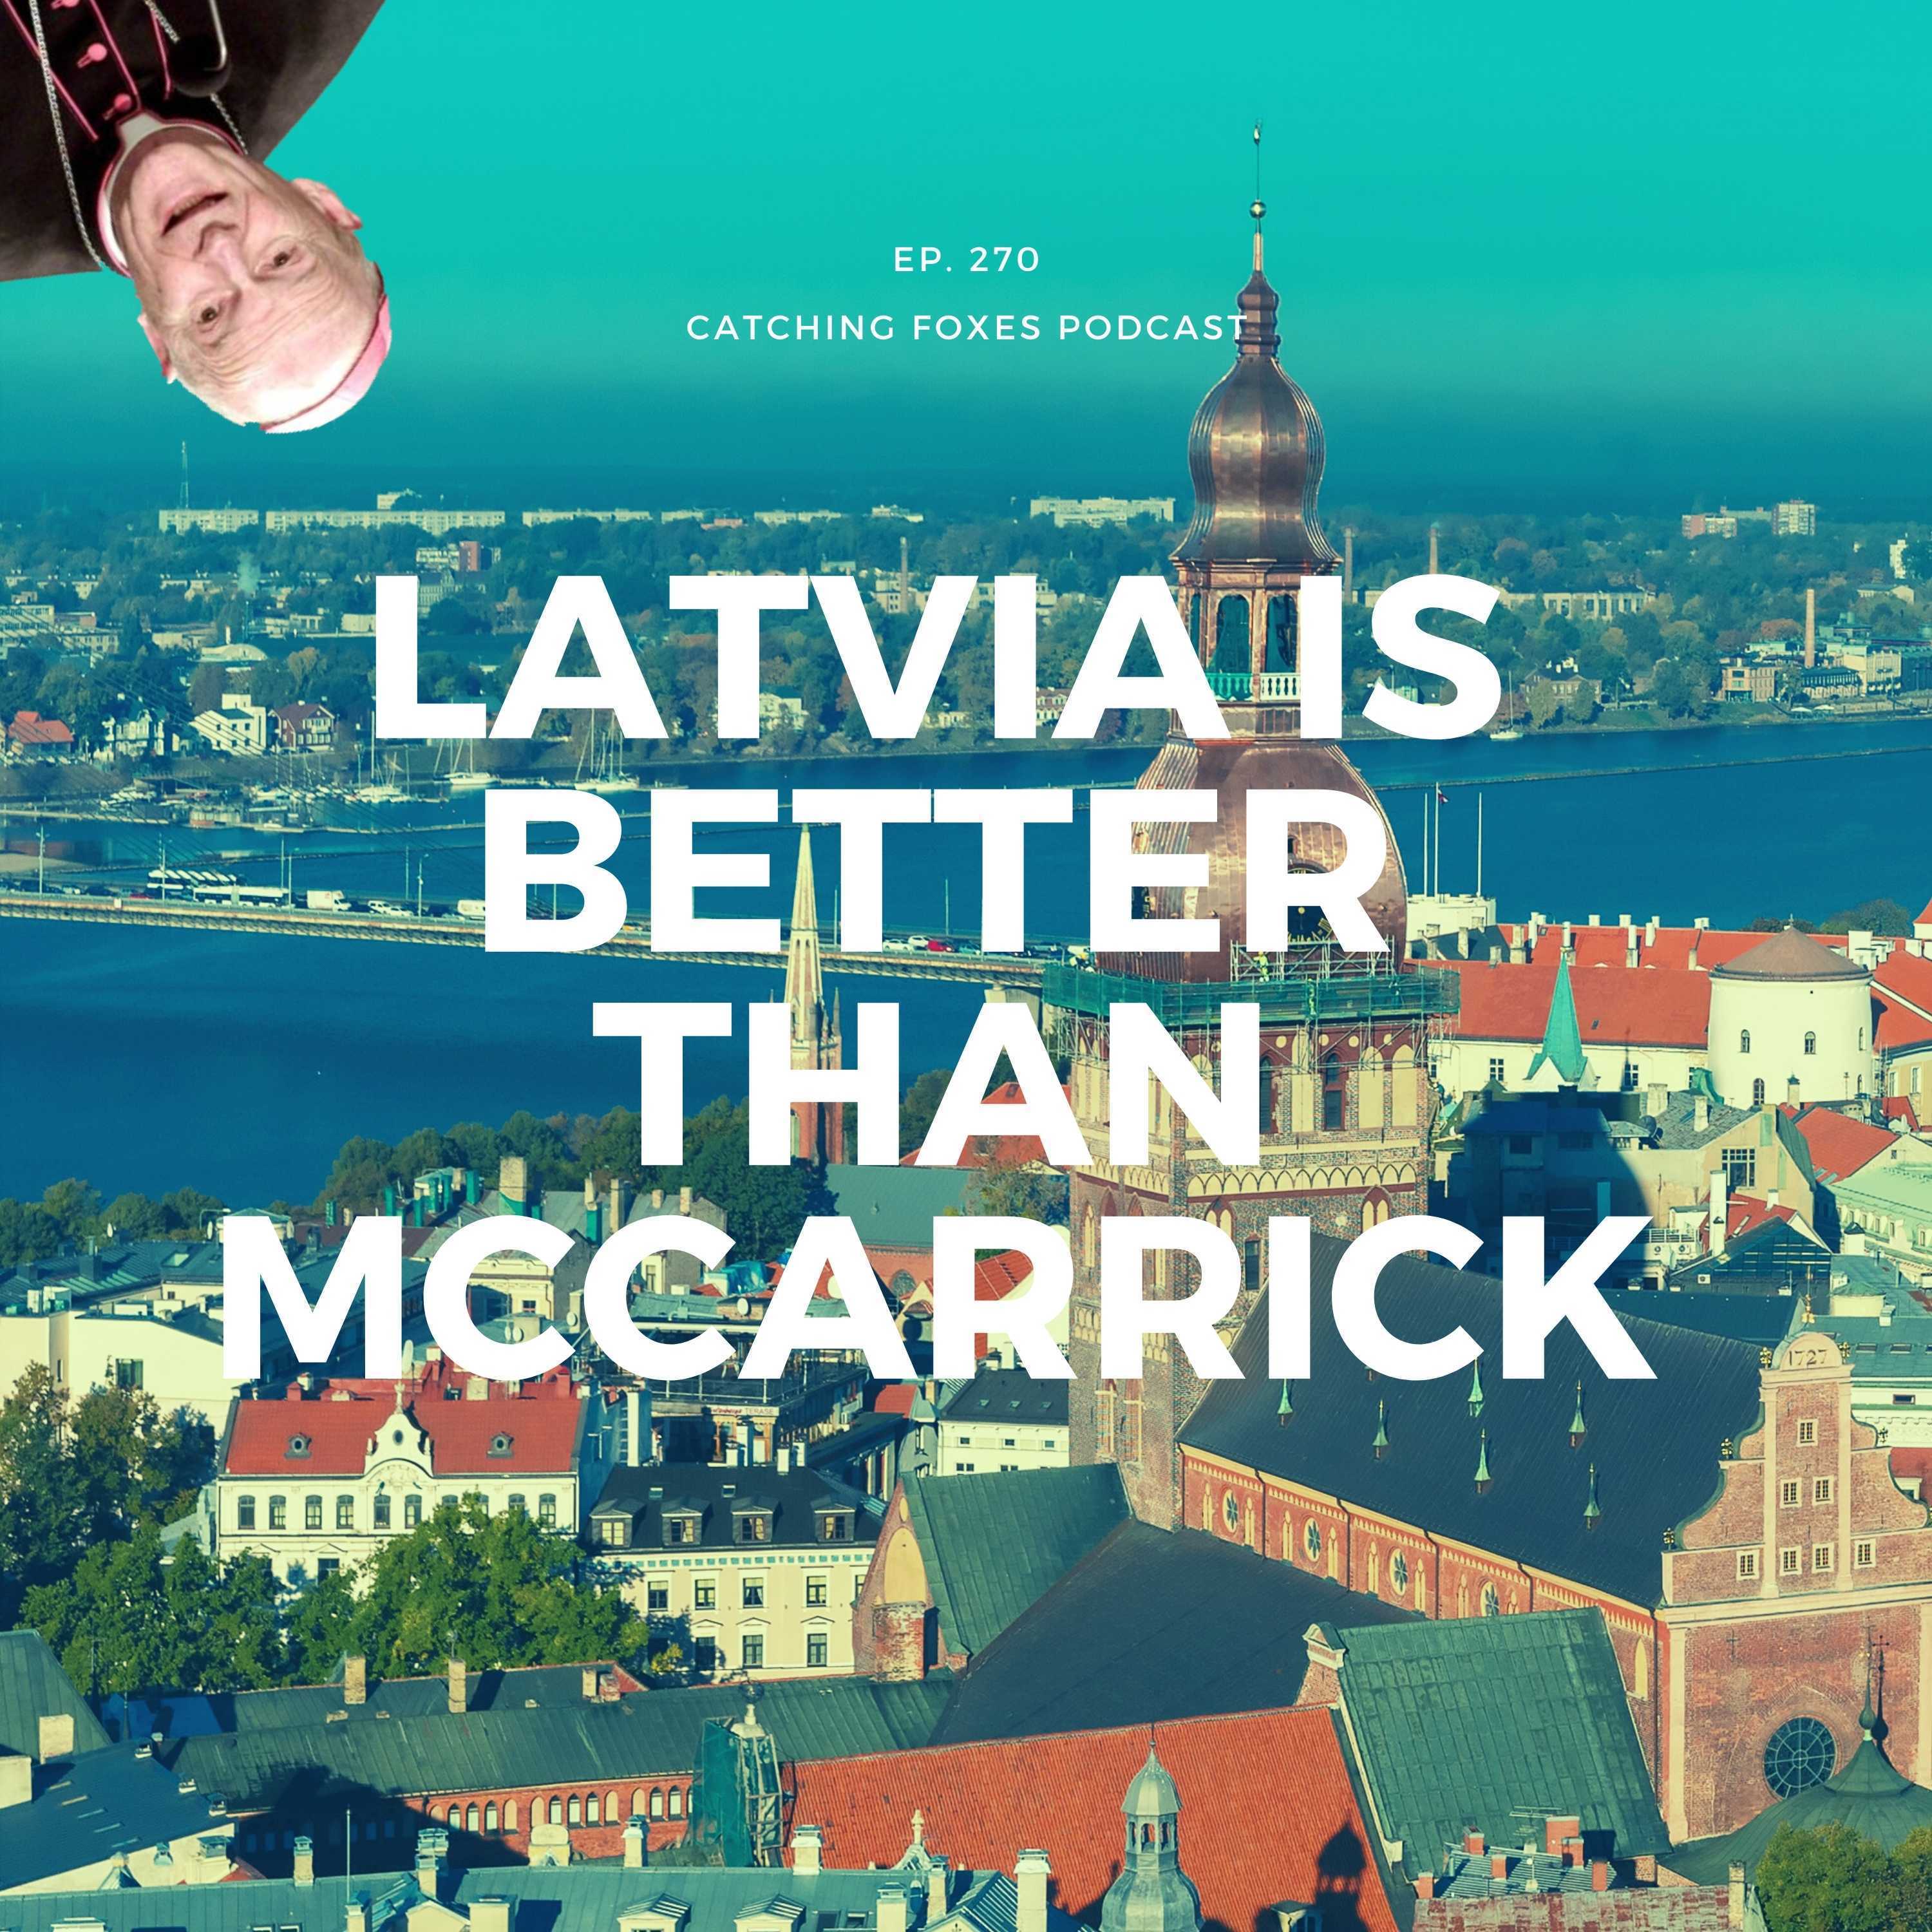 Latvia is better than McCarrick